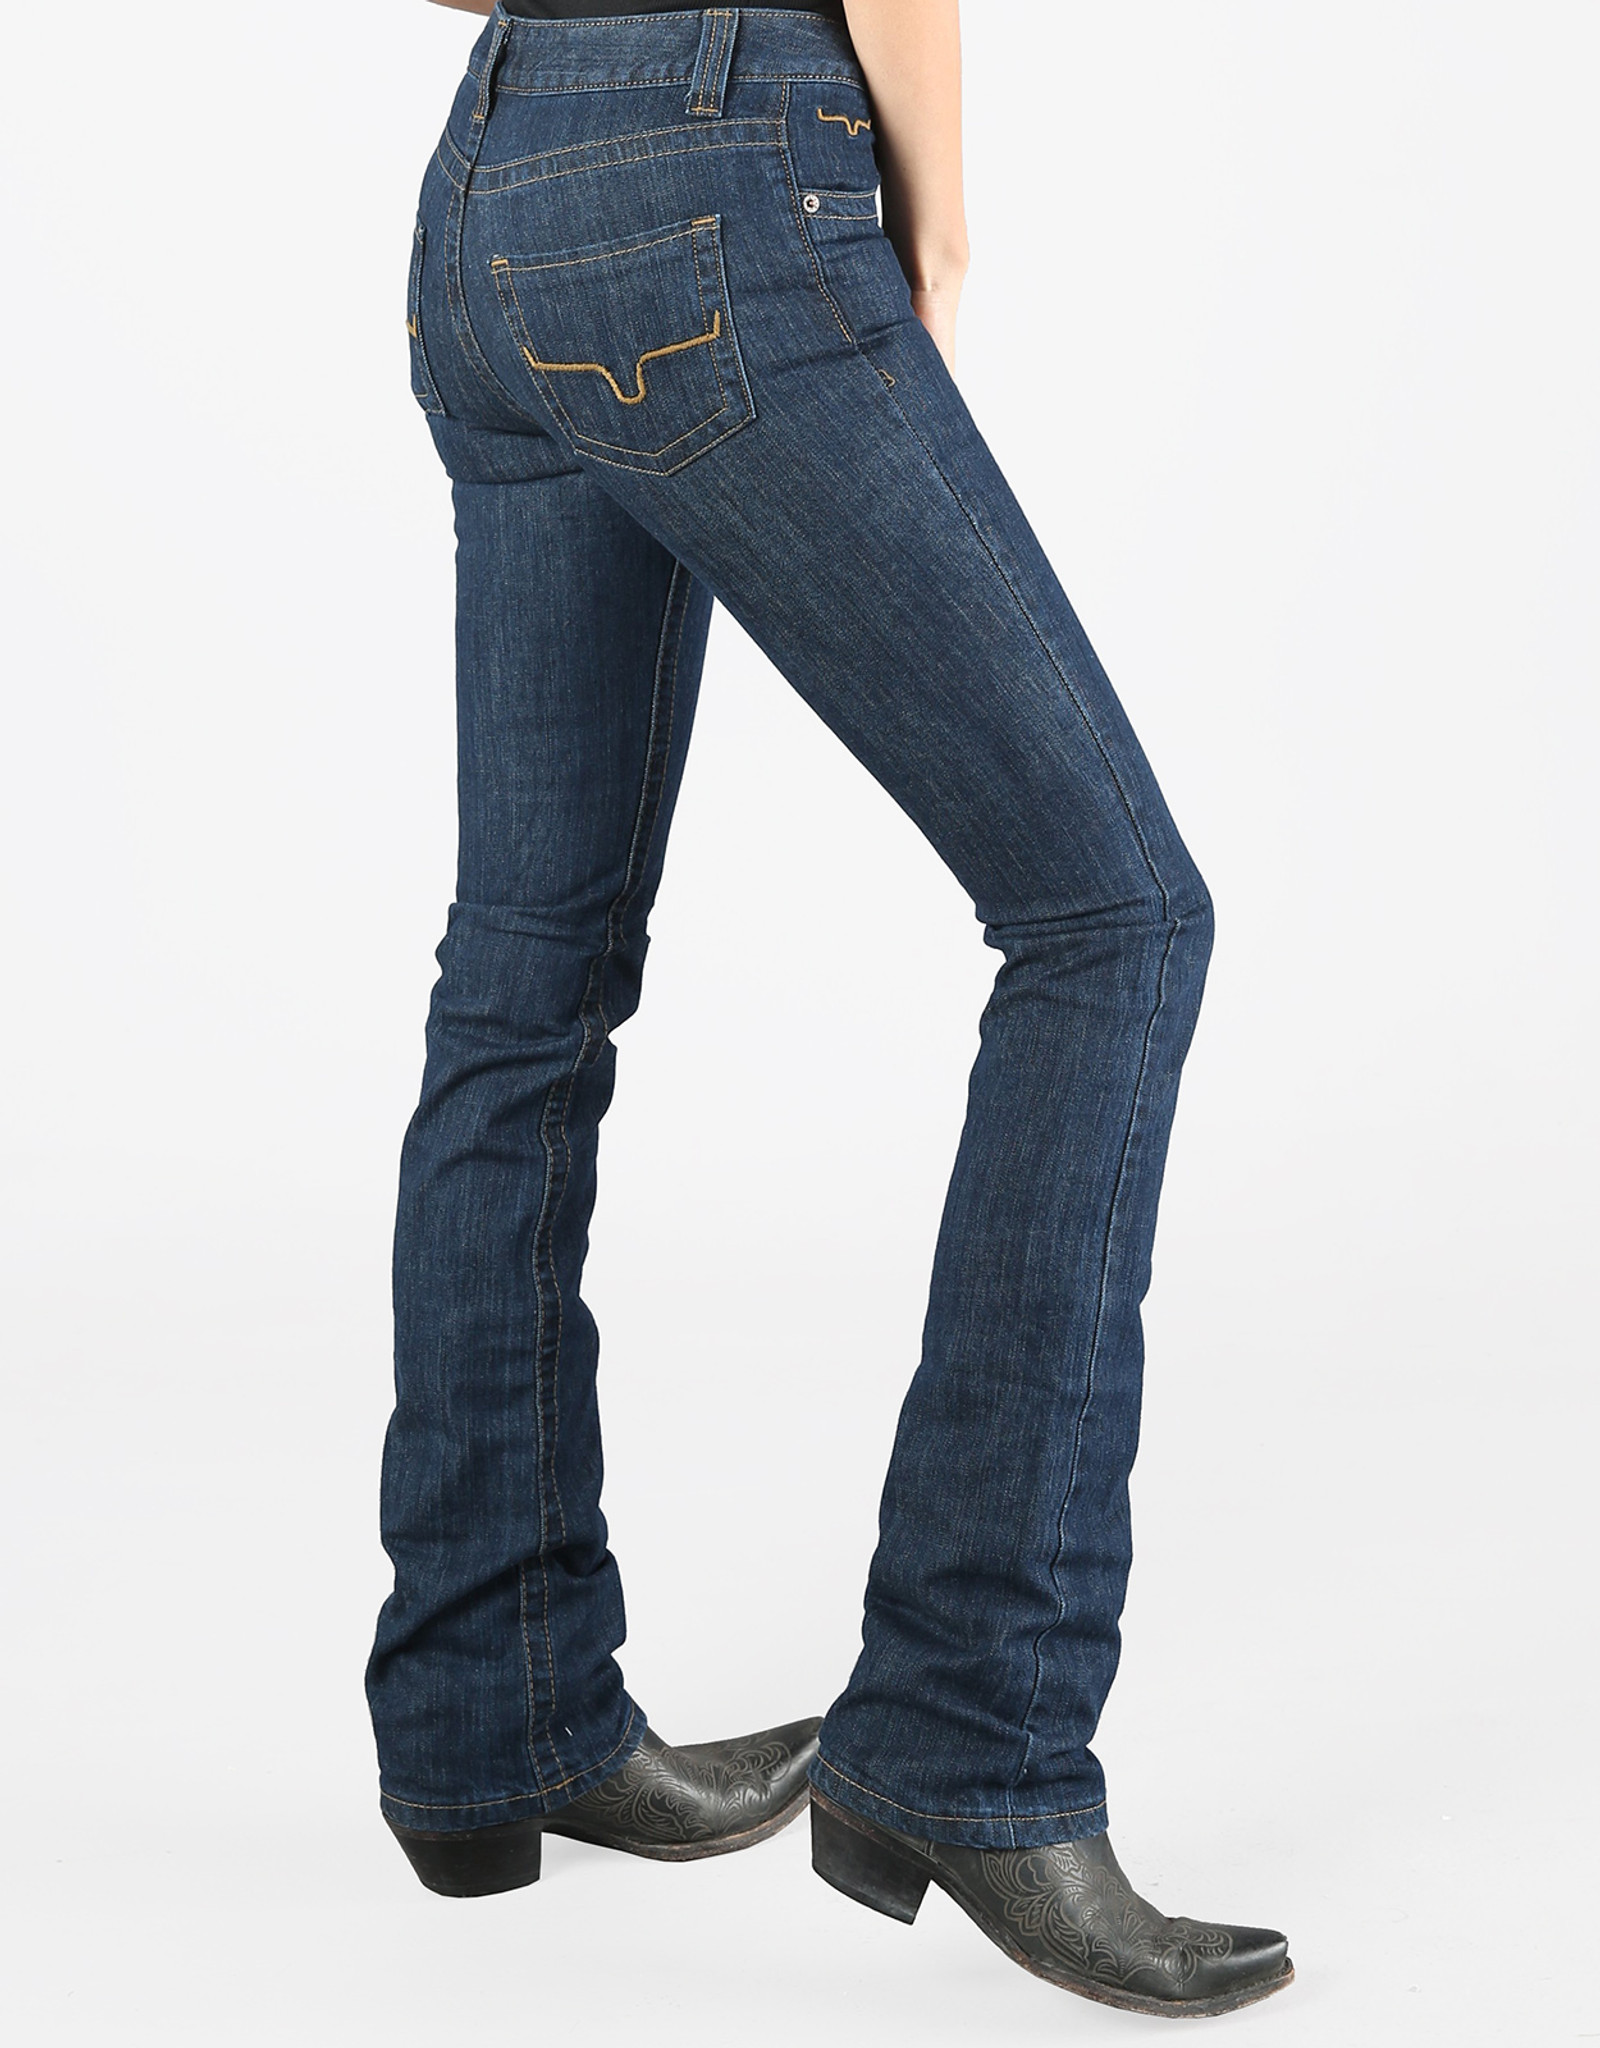 Kimes Ranch Women's Stretch Betty Mid Rise Slim Fit Boot Cut Jeans - Dark Indigo